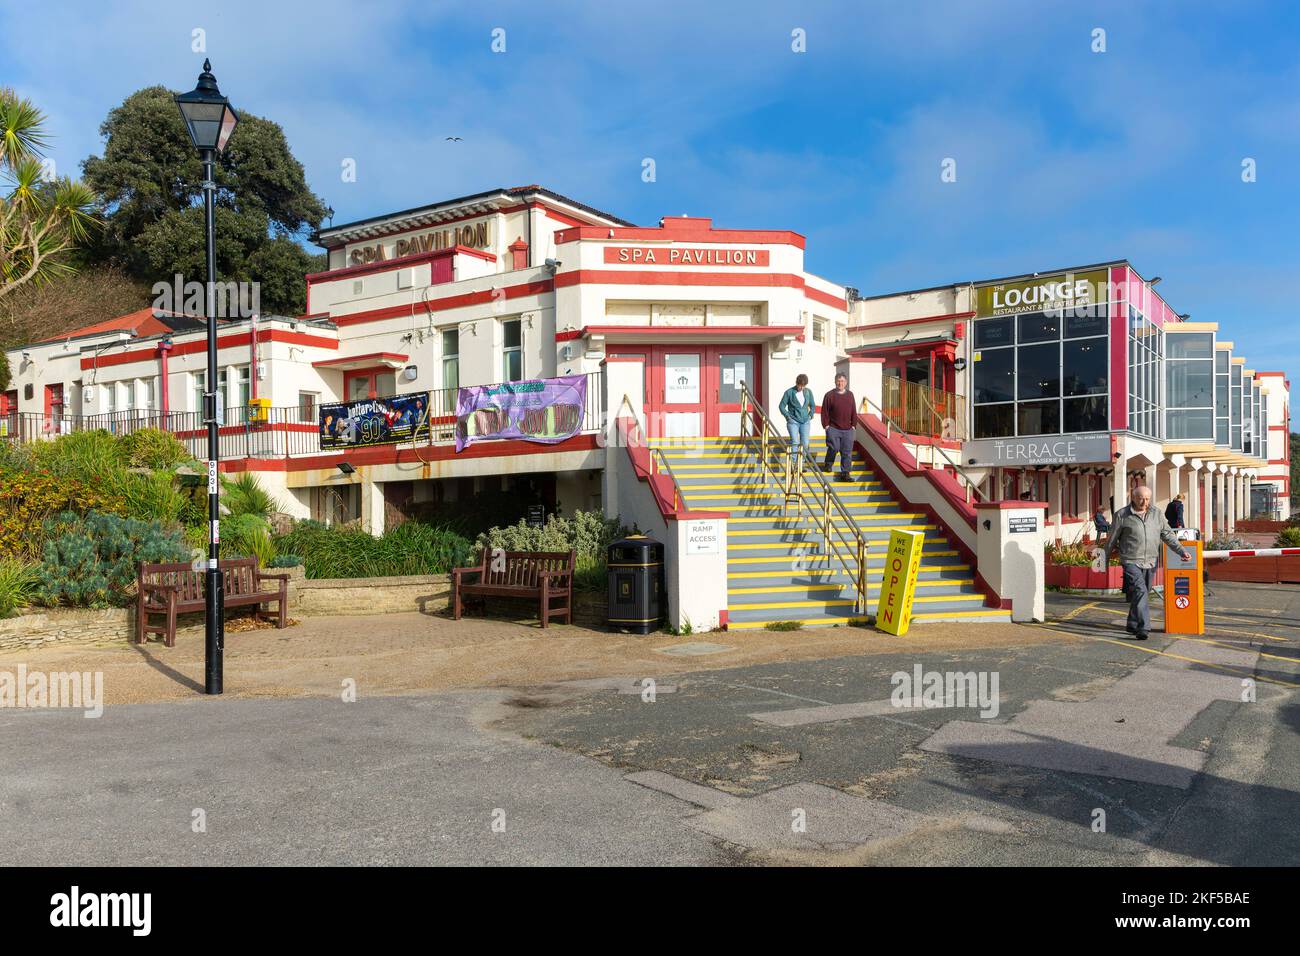 Spa Pavilion theatre venue on seafront, Felixstowe,  Suffolk, England, UK Stock Photo